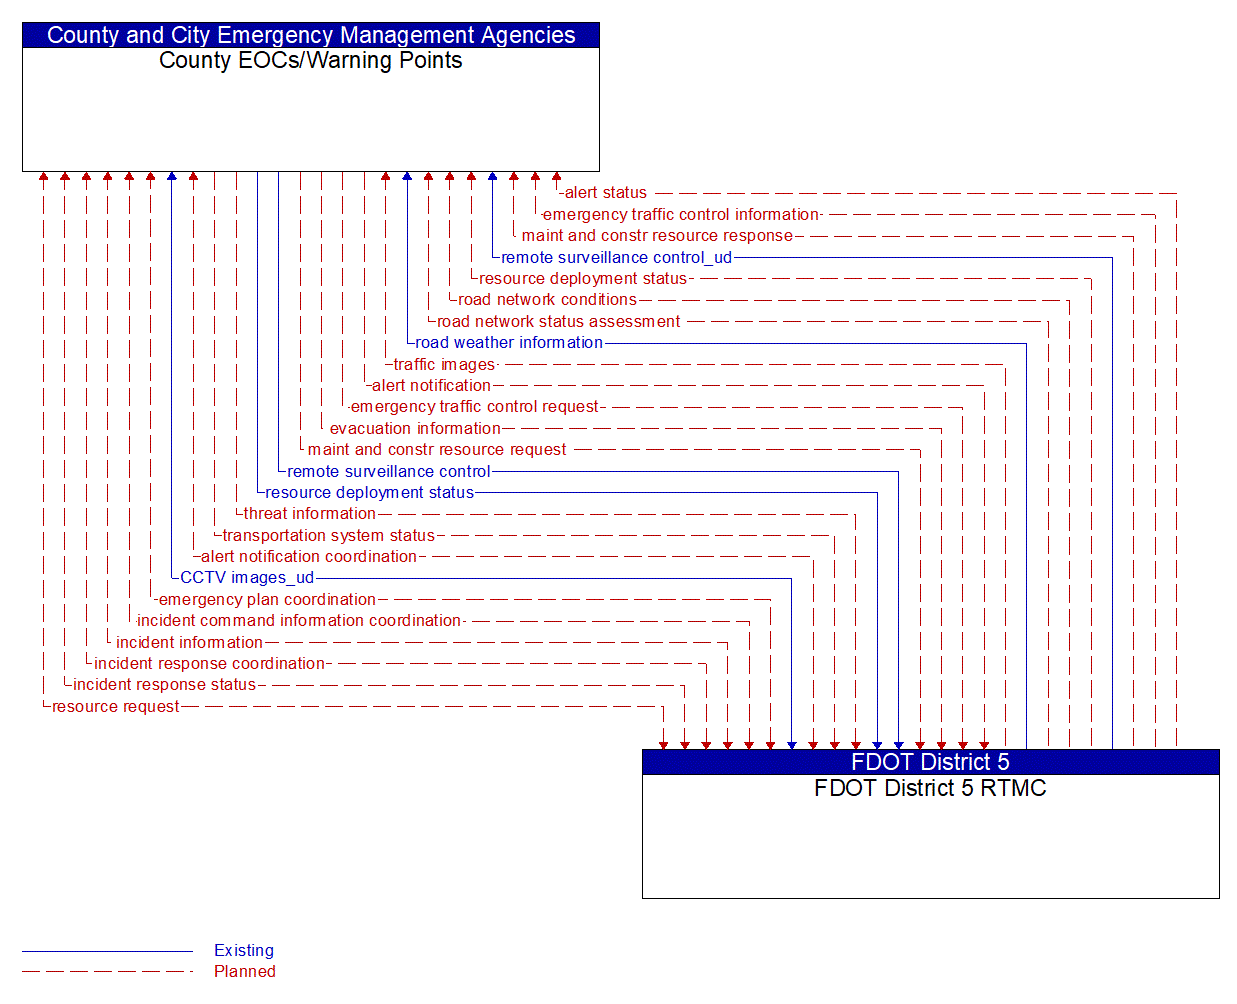 Architecture Flow Diagram: FDOT District 5 RTMC <--> County EOCs/Warning Points